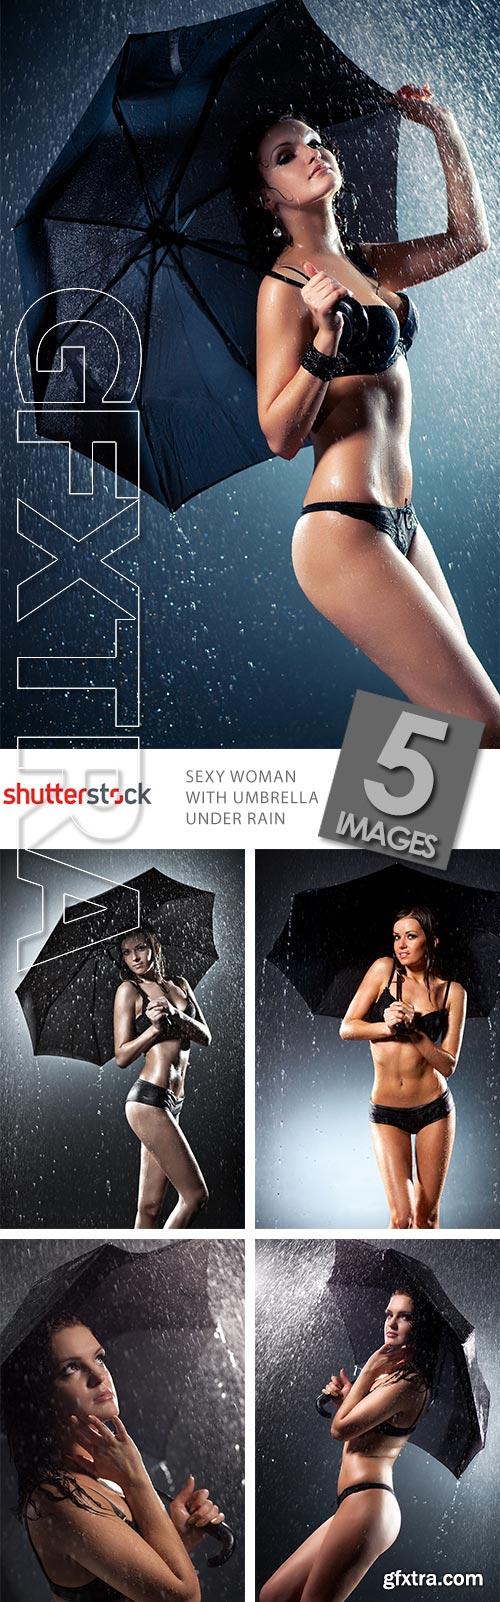 Sexy Woman with Umbrella under Rain 5xJPGs